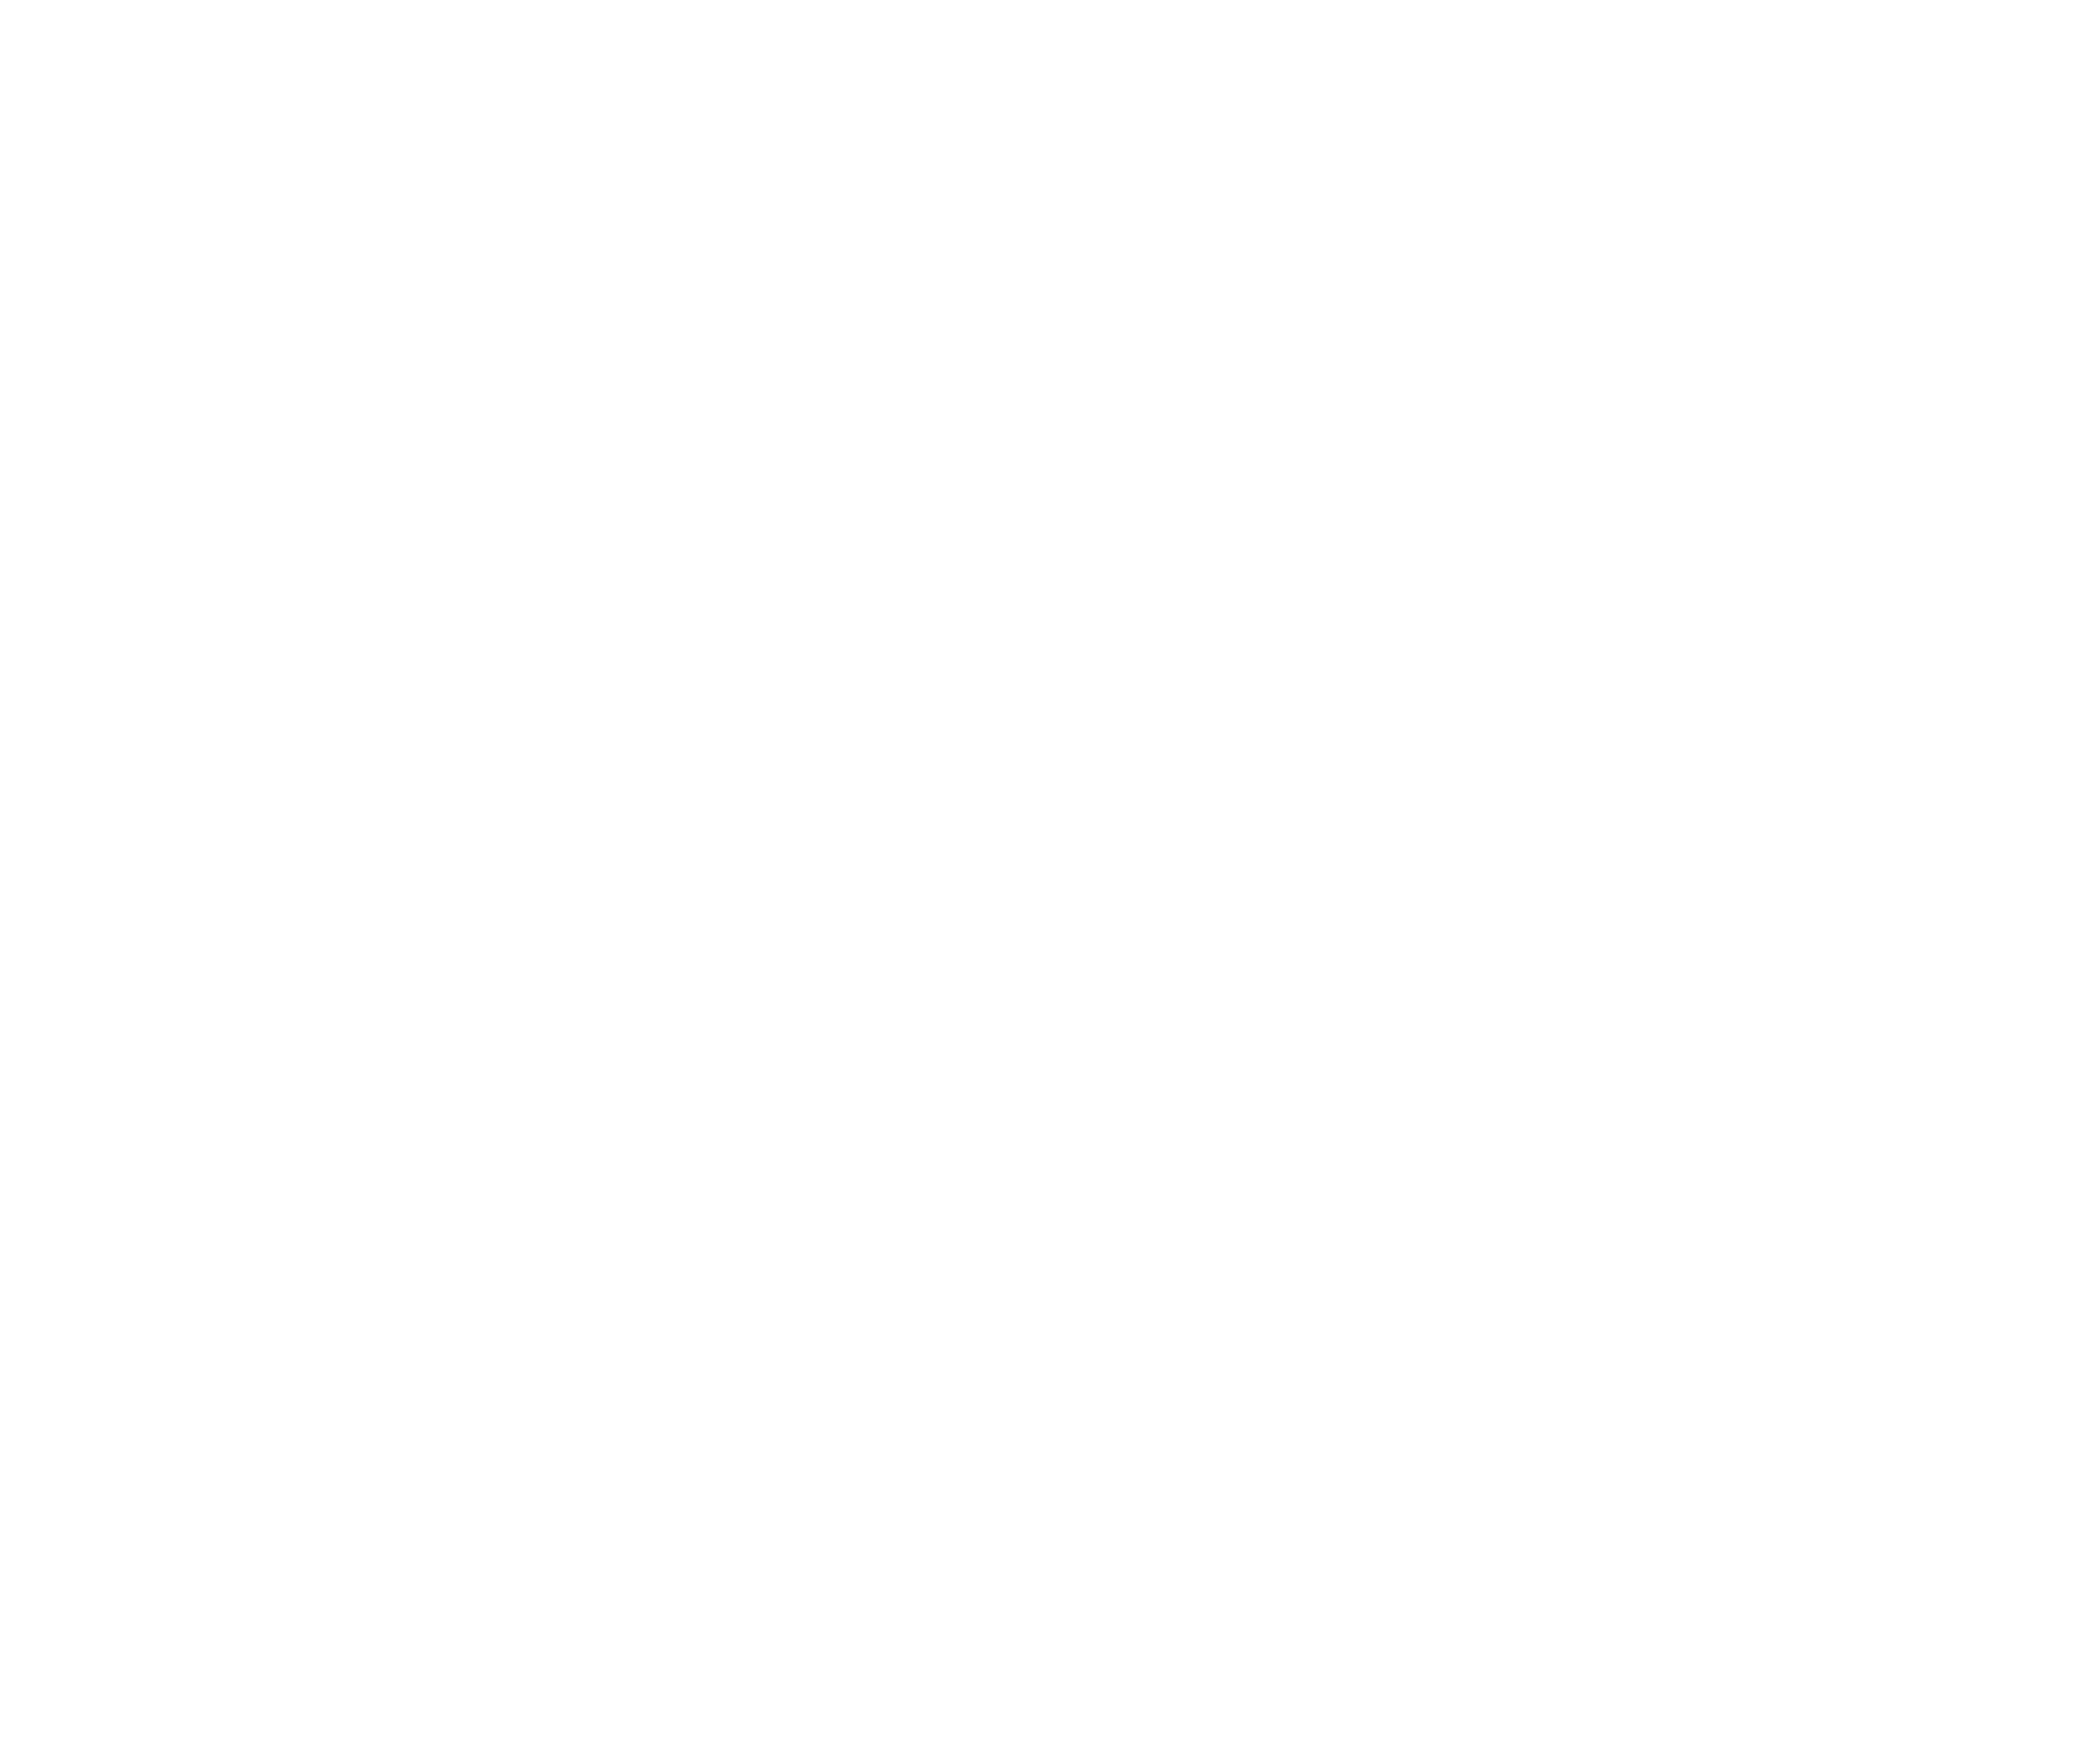 Kavvathas Group